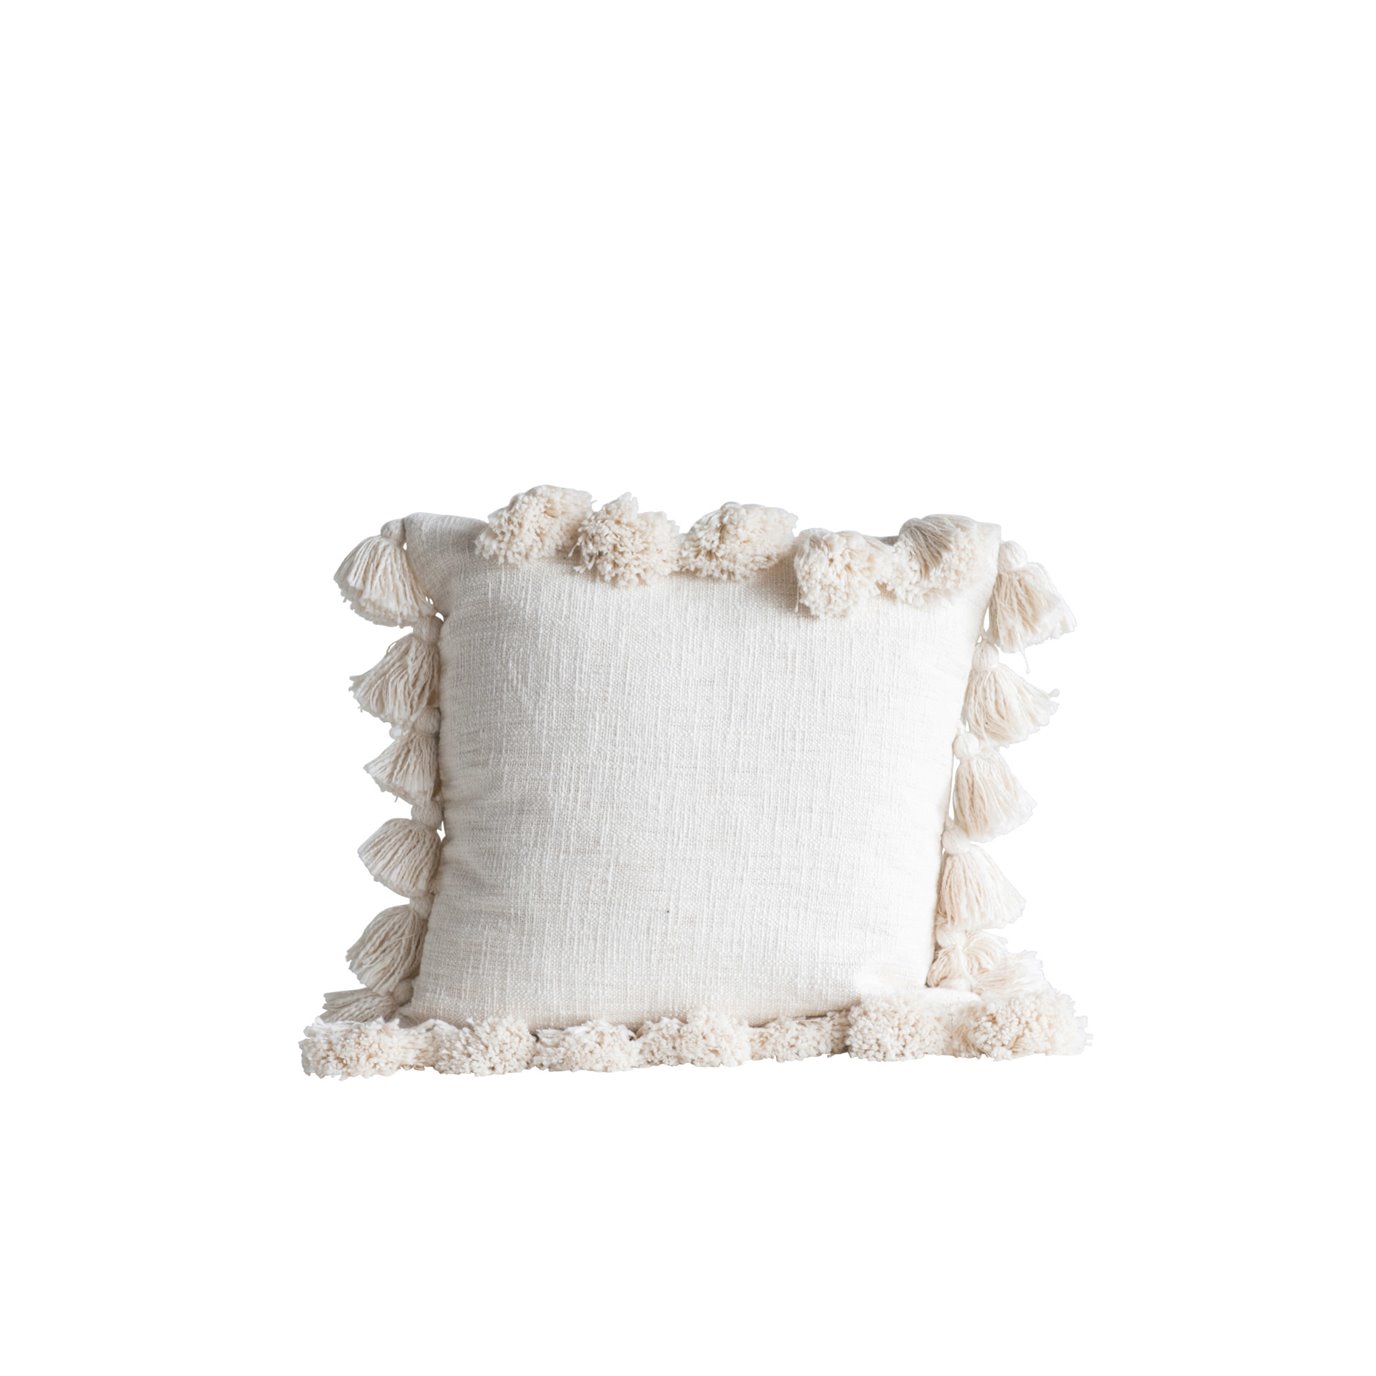 Luxurious Cream Square Cotton Woven Slub Pillow with Tassels